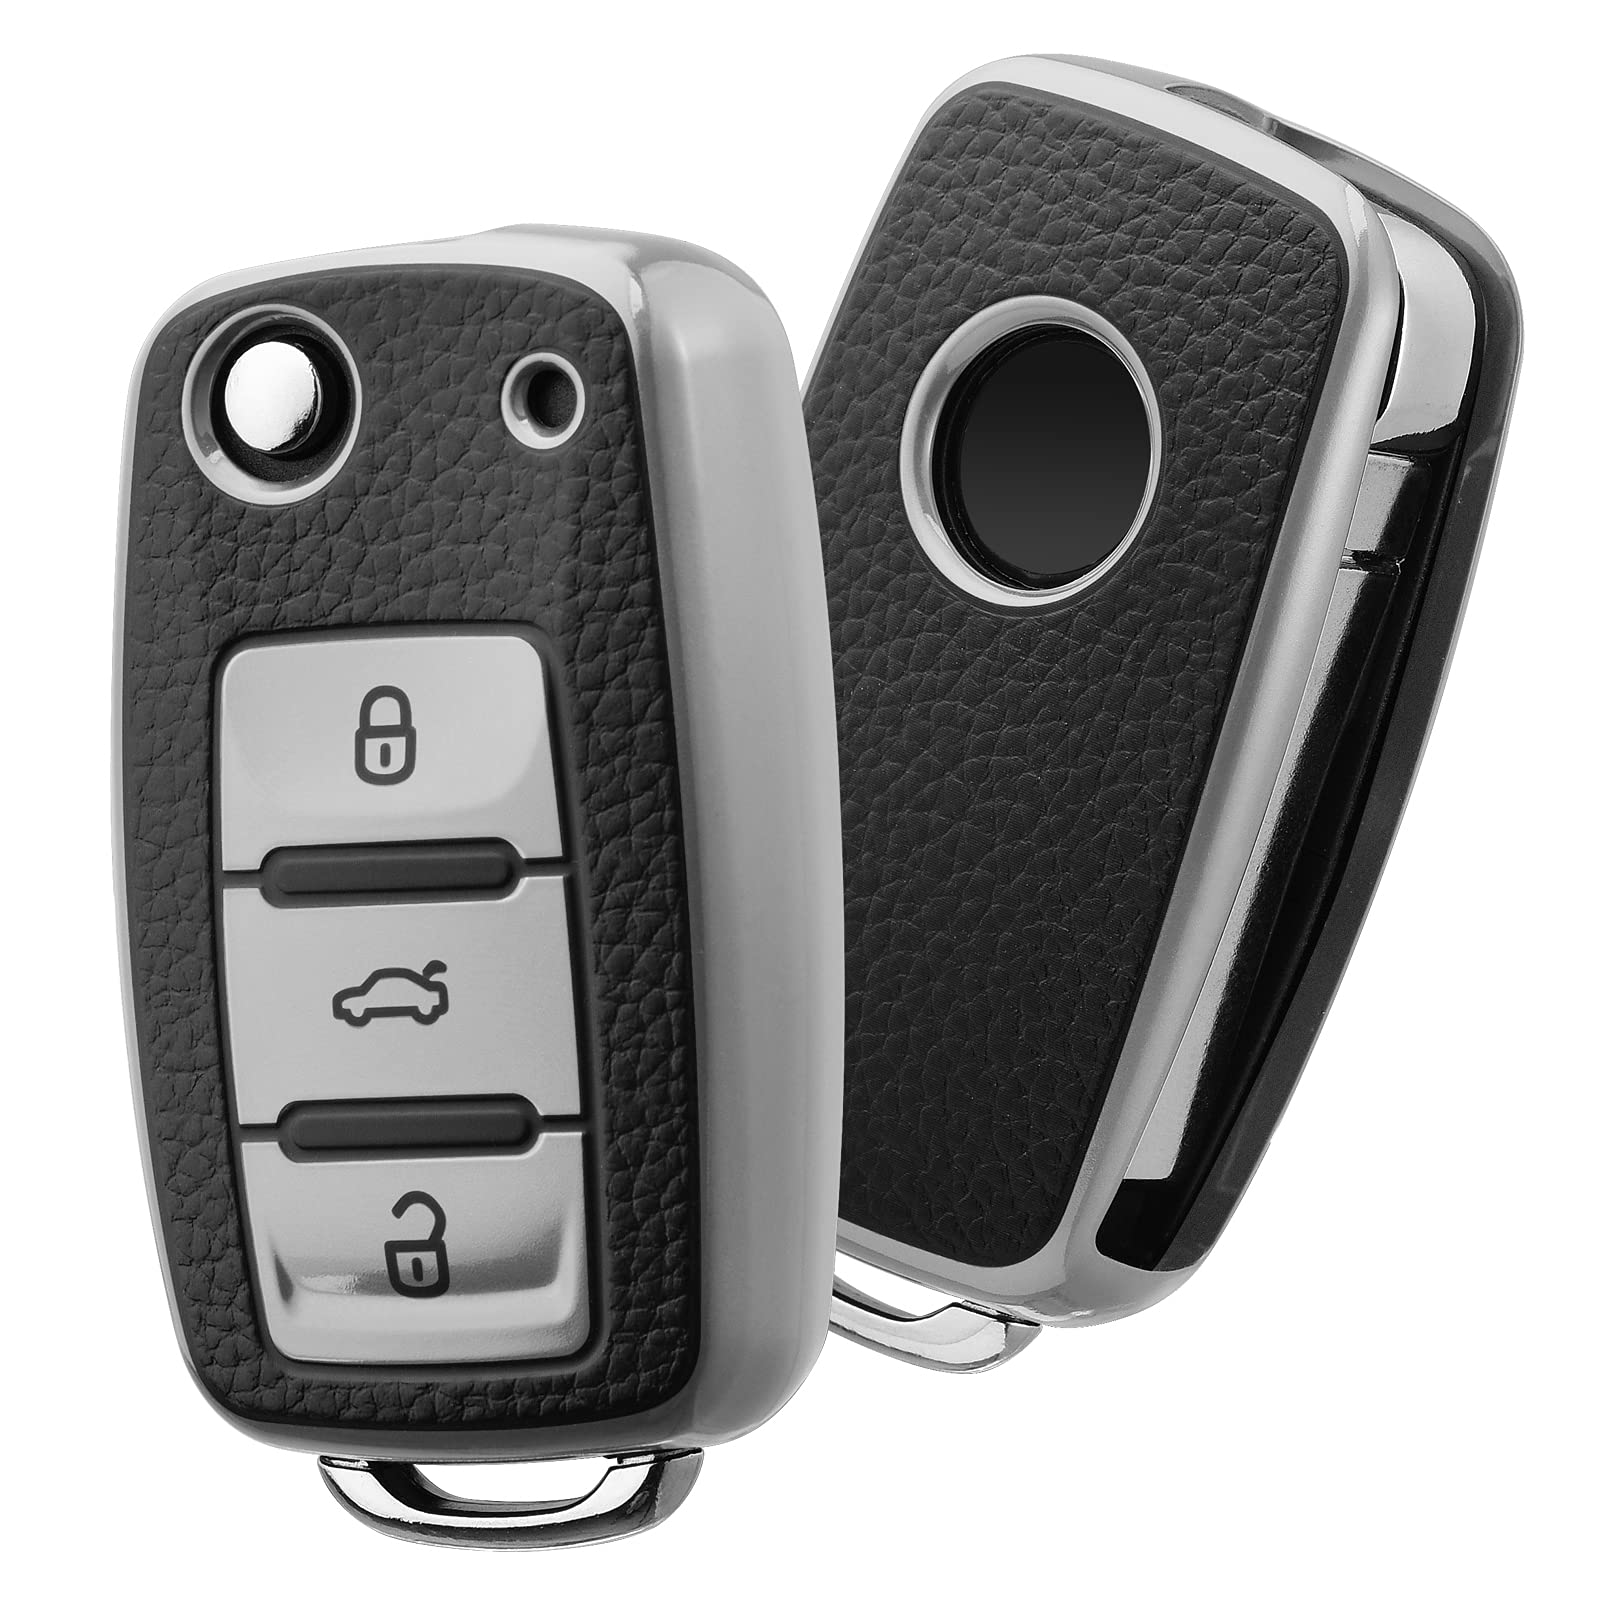 OATSBASF Autoschlüssel Hülle VW, VW Golf Schlüsselbox, Schlüsselhülle Cover für vw Polo Passat Skoda Seat 3-Tasten (PW-Silber) von OATSBASF